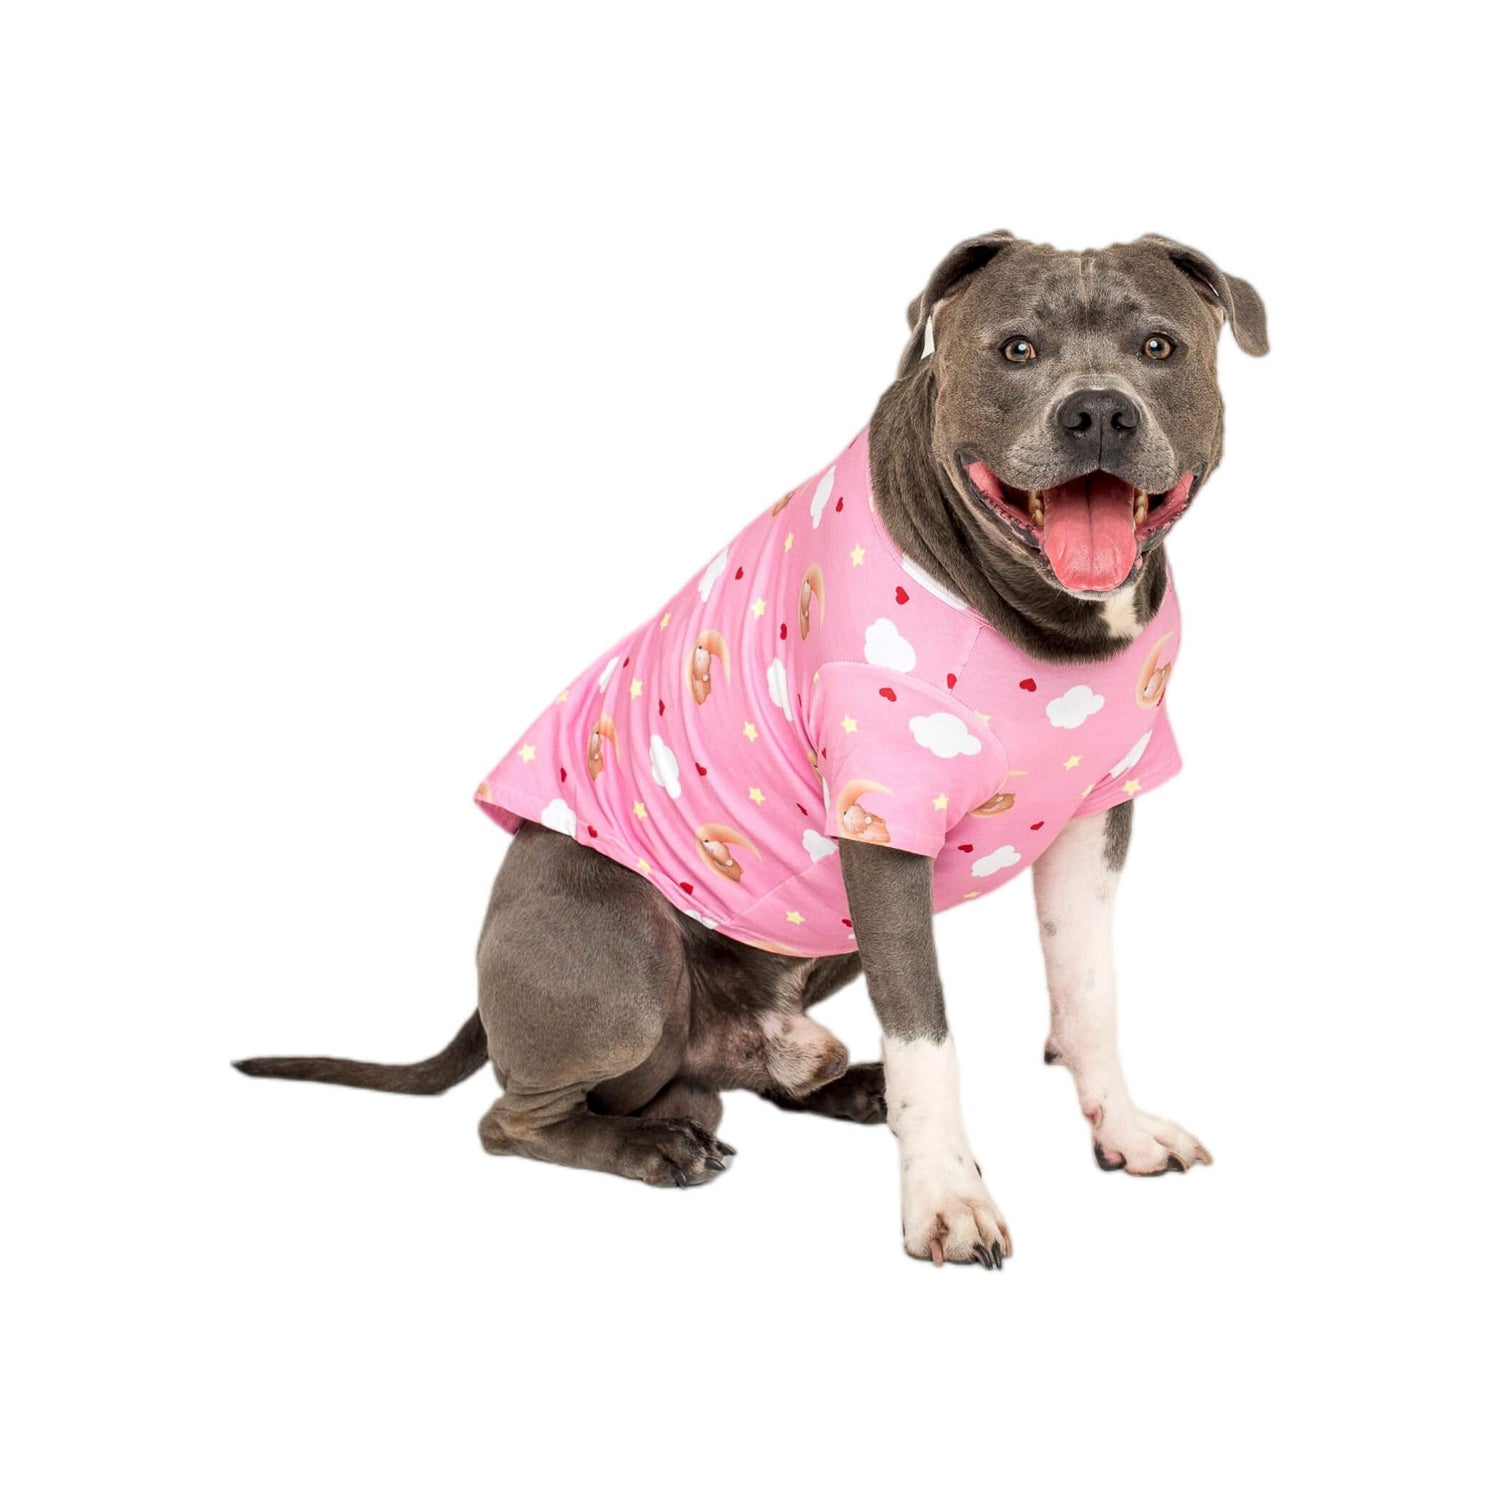 An American staffy sitting down wearing Vibrant Hound's Lil Dreamer dog sleep apparel range.